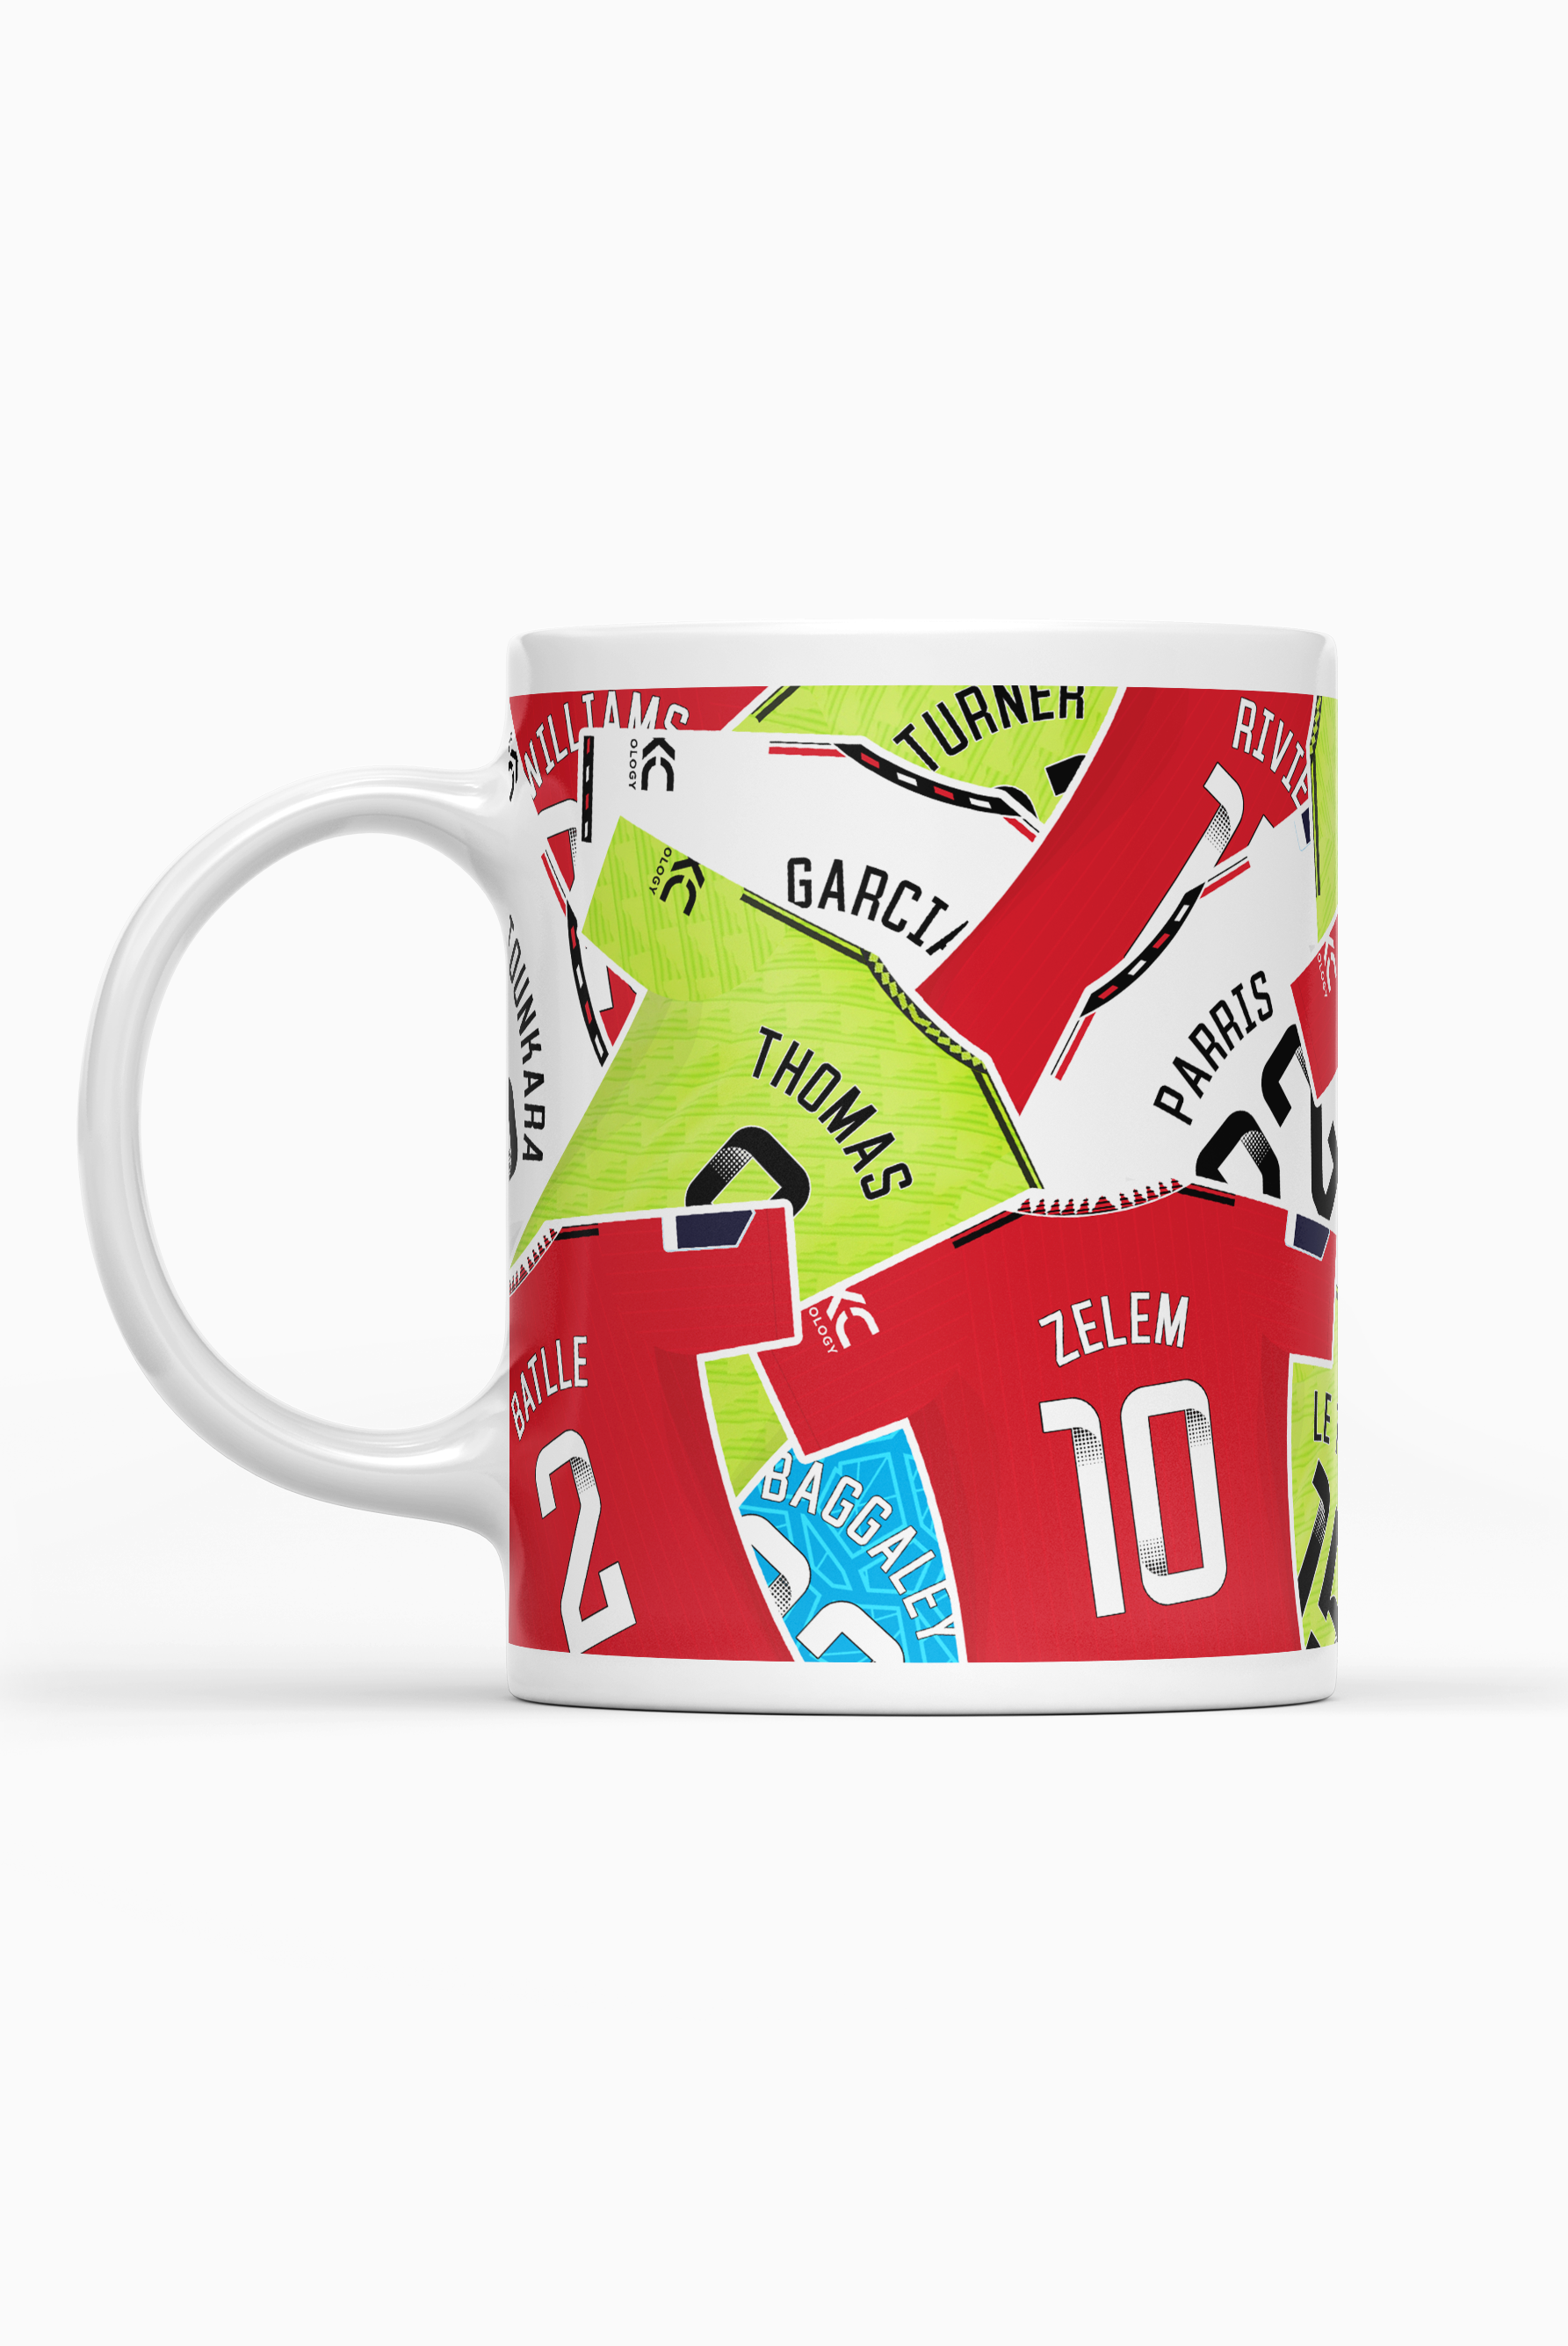 Man United Women / 2022-23 Squad Mug